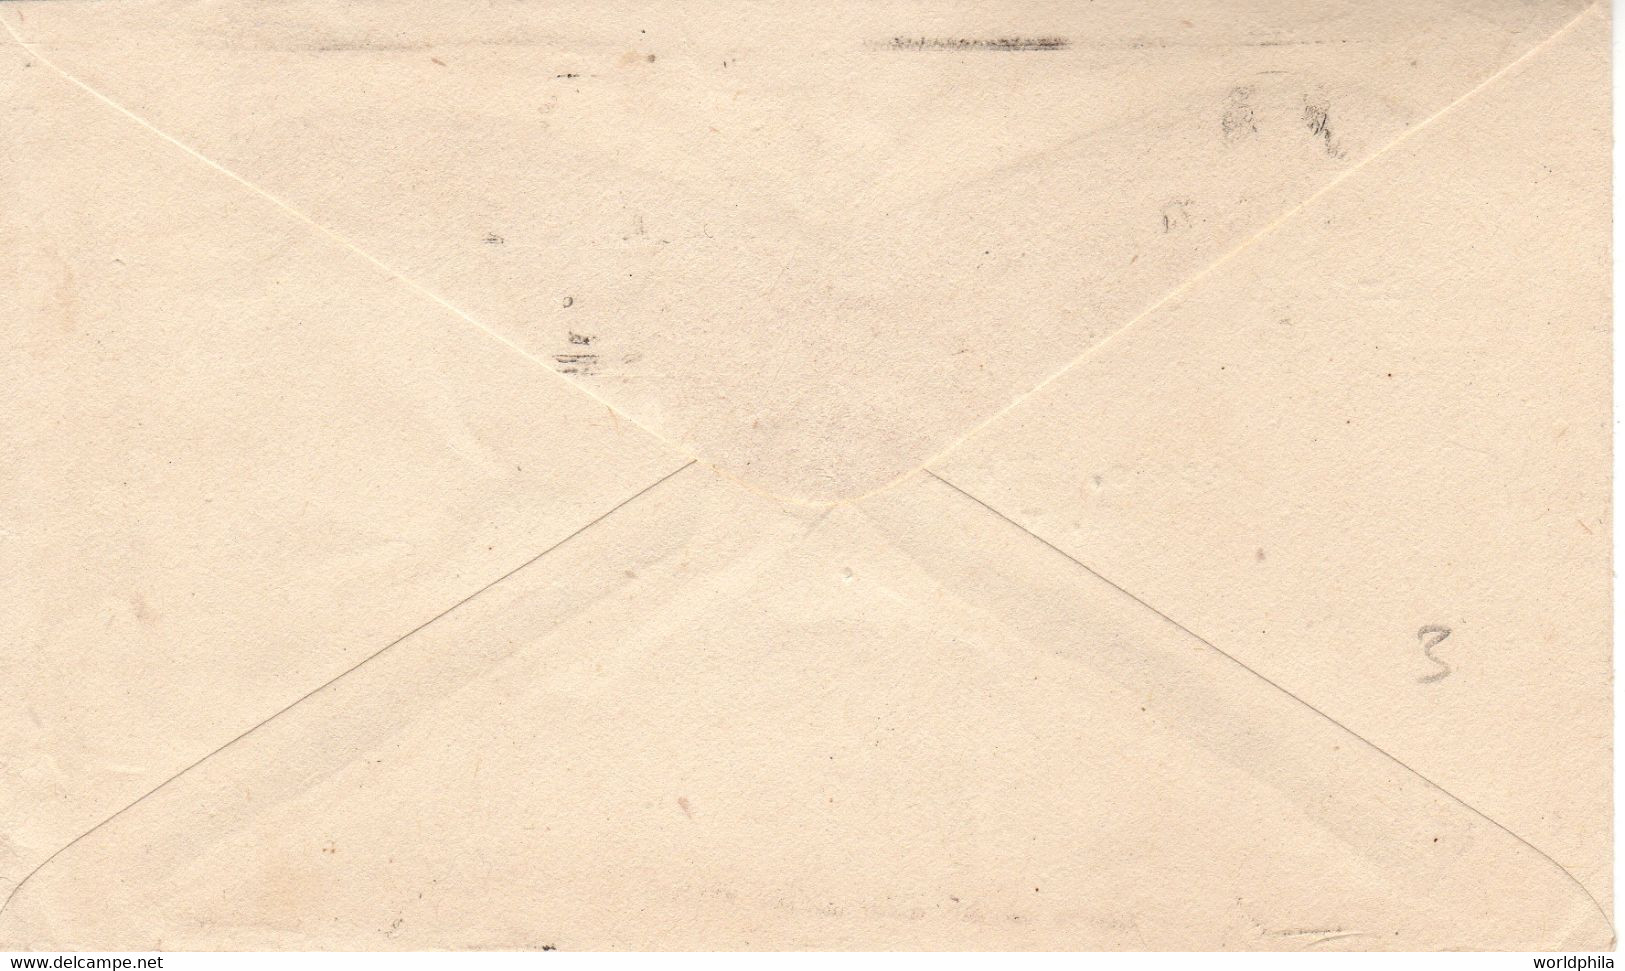 South Africa-Israel 1949 Postage Due I, Bale PD3,4 Overprinted Doar Ivri Stamps, Postal History, High Value Cover - Segnatasse